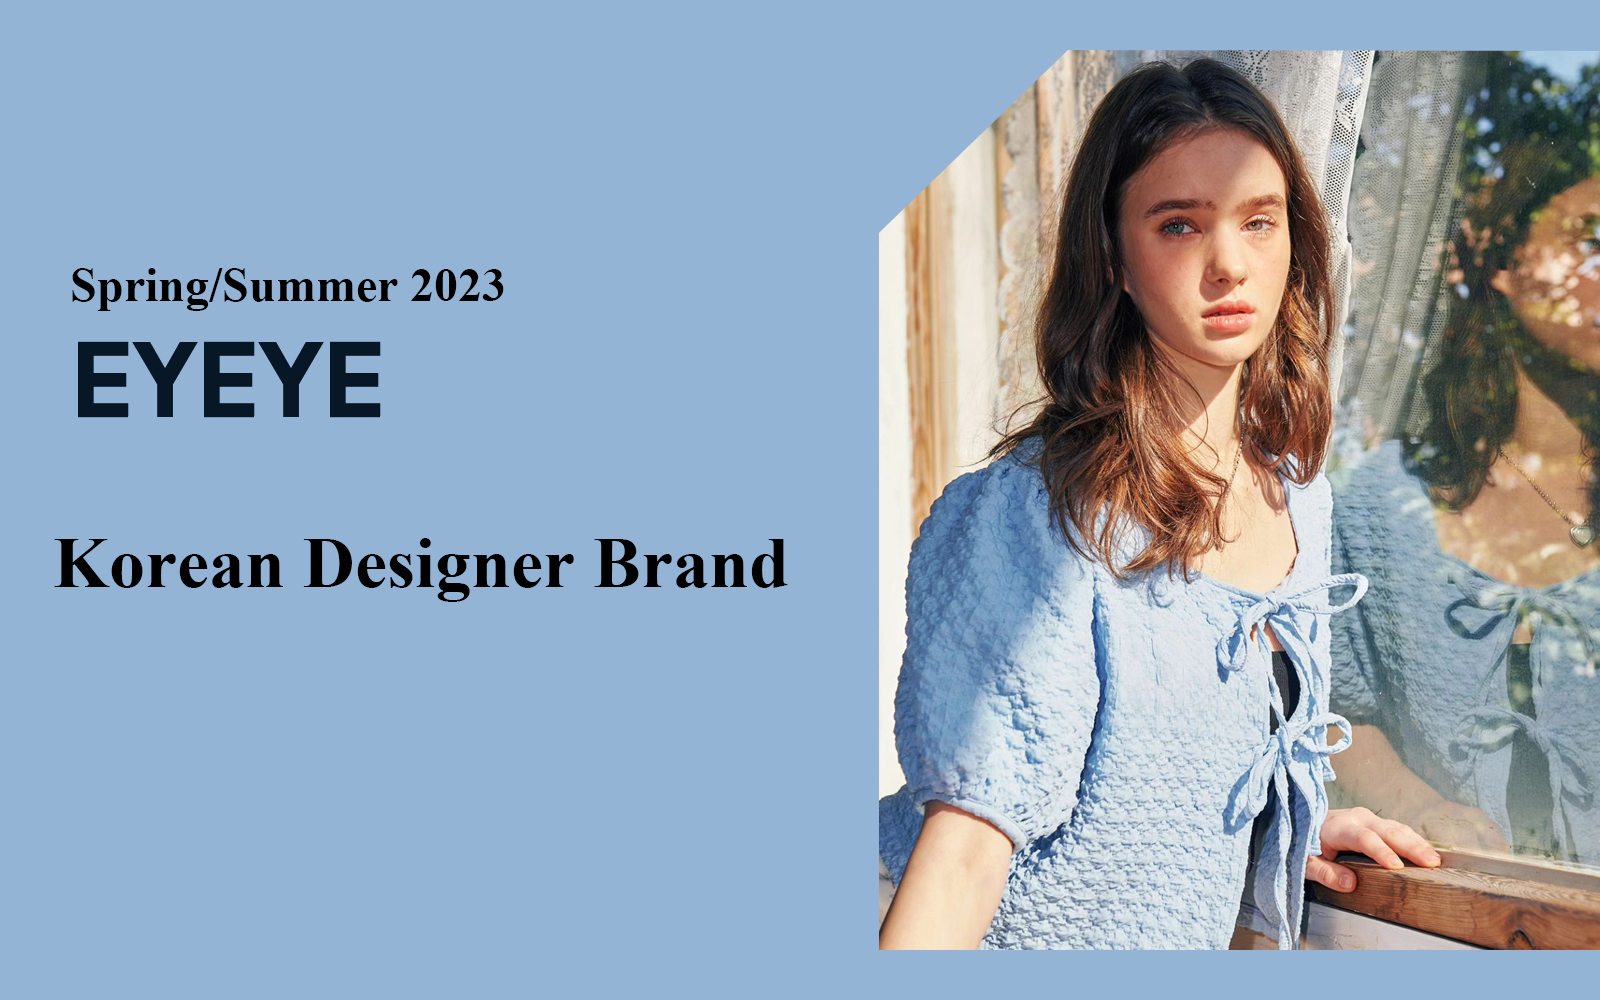 Elegant Lady -- The Analysis of EYEYE The Korean Designer Brand